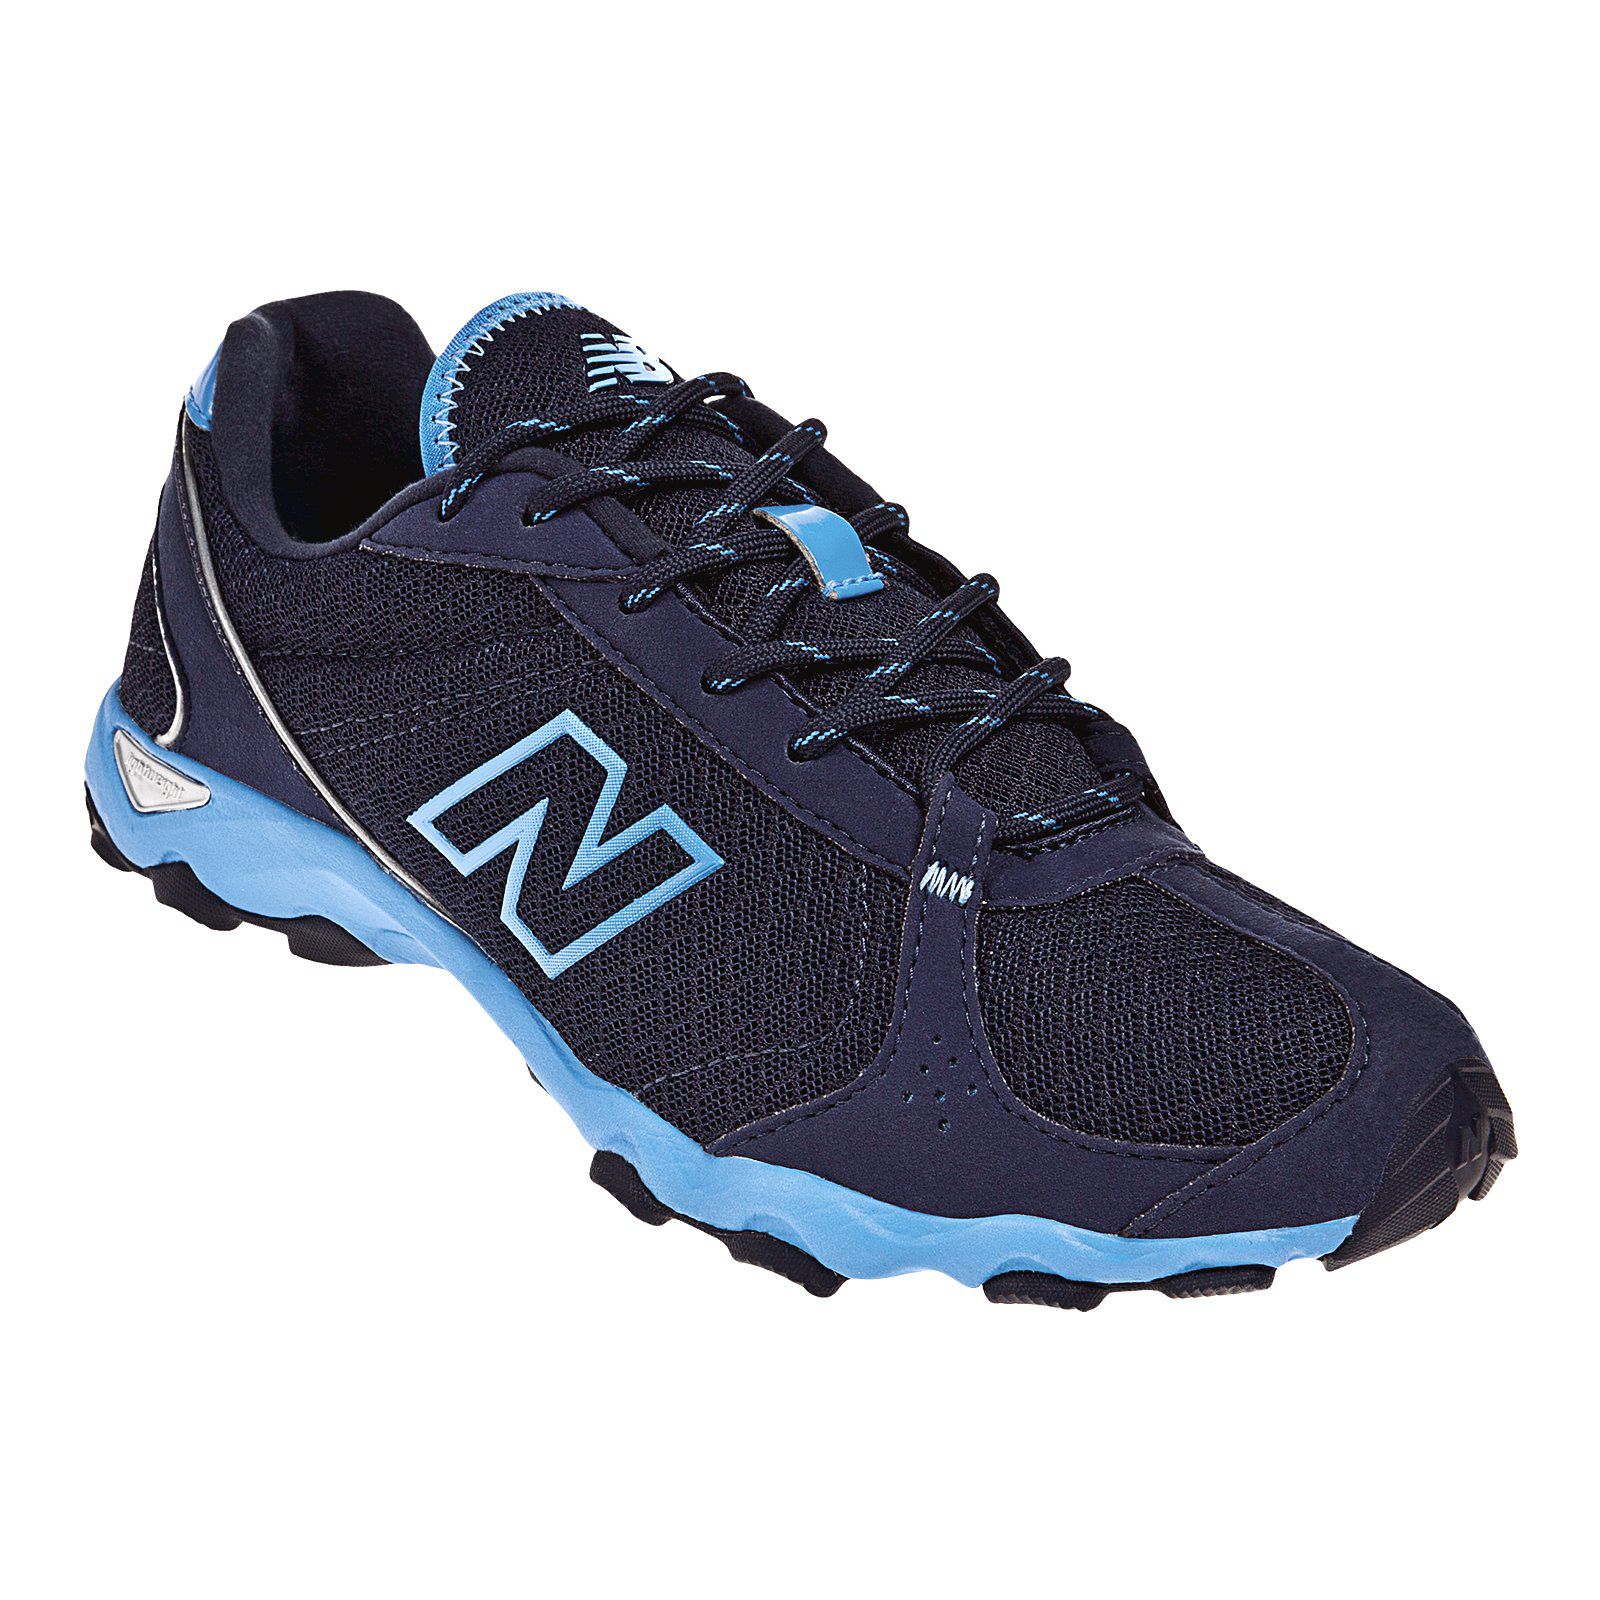 New Balance Women's 661 Trail Running Athletic Shoe - Navy/Light Blue